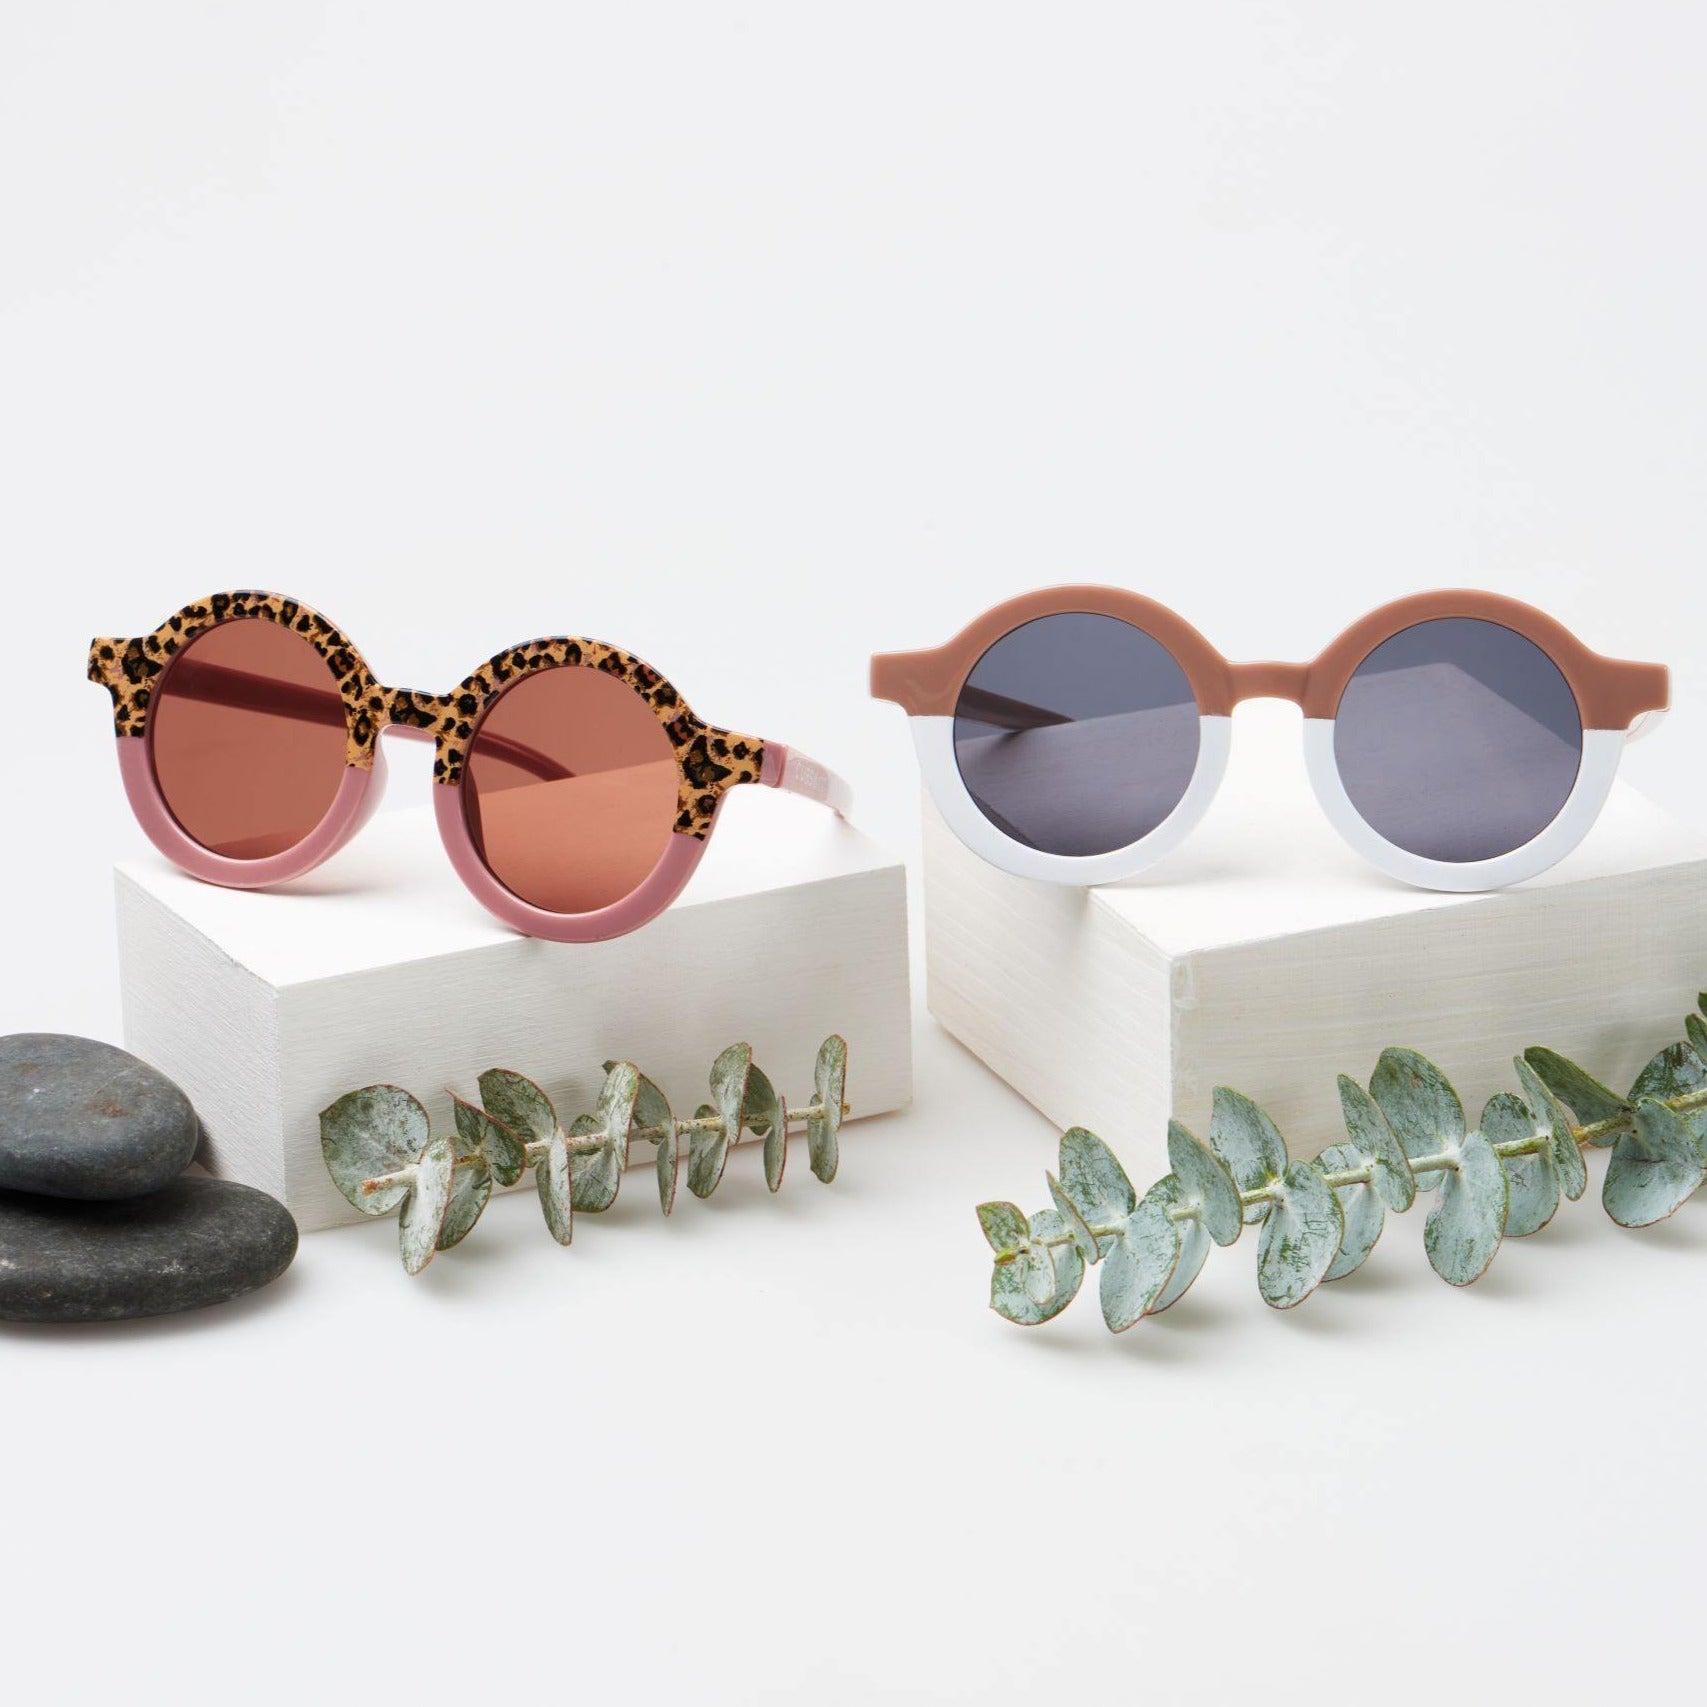 Kids Sunglasses, Baby Sunglasses, UV400 Protection - Cubs & Co. Australia